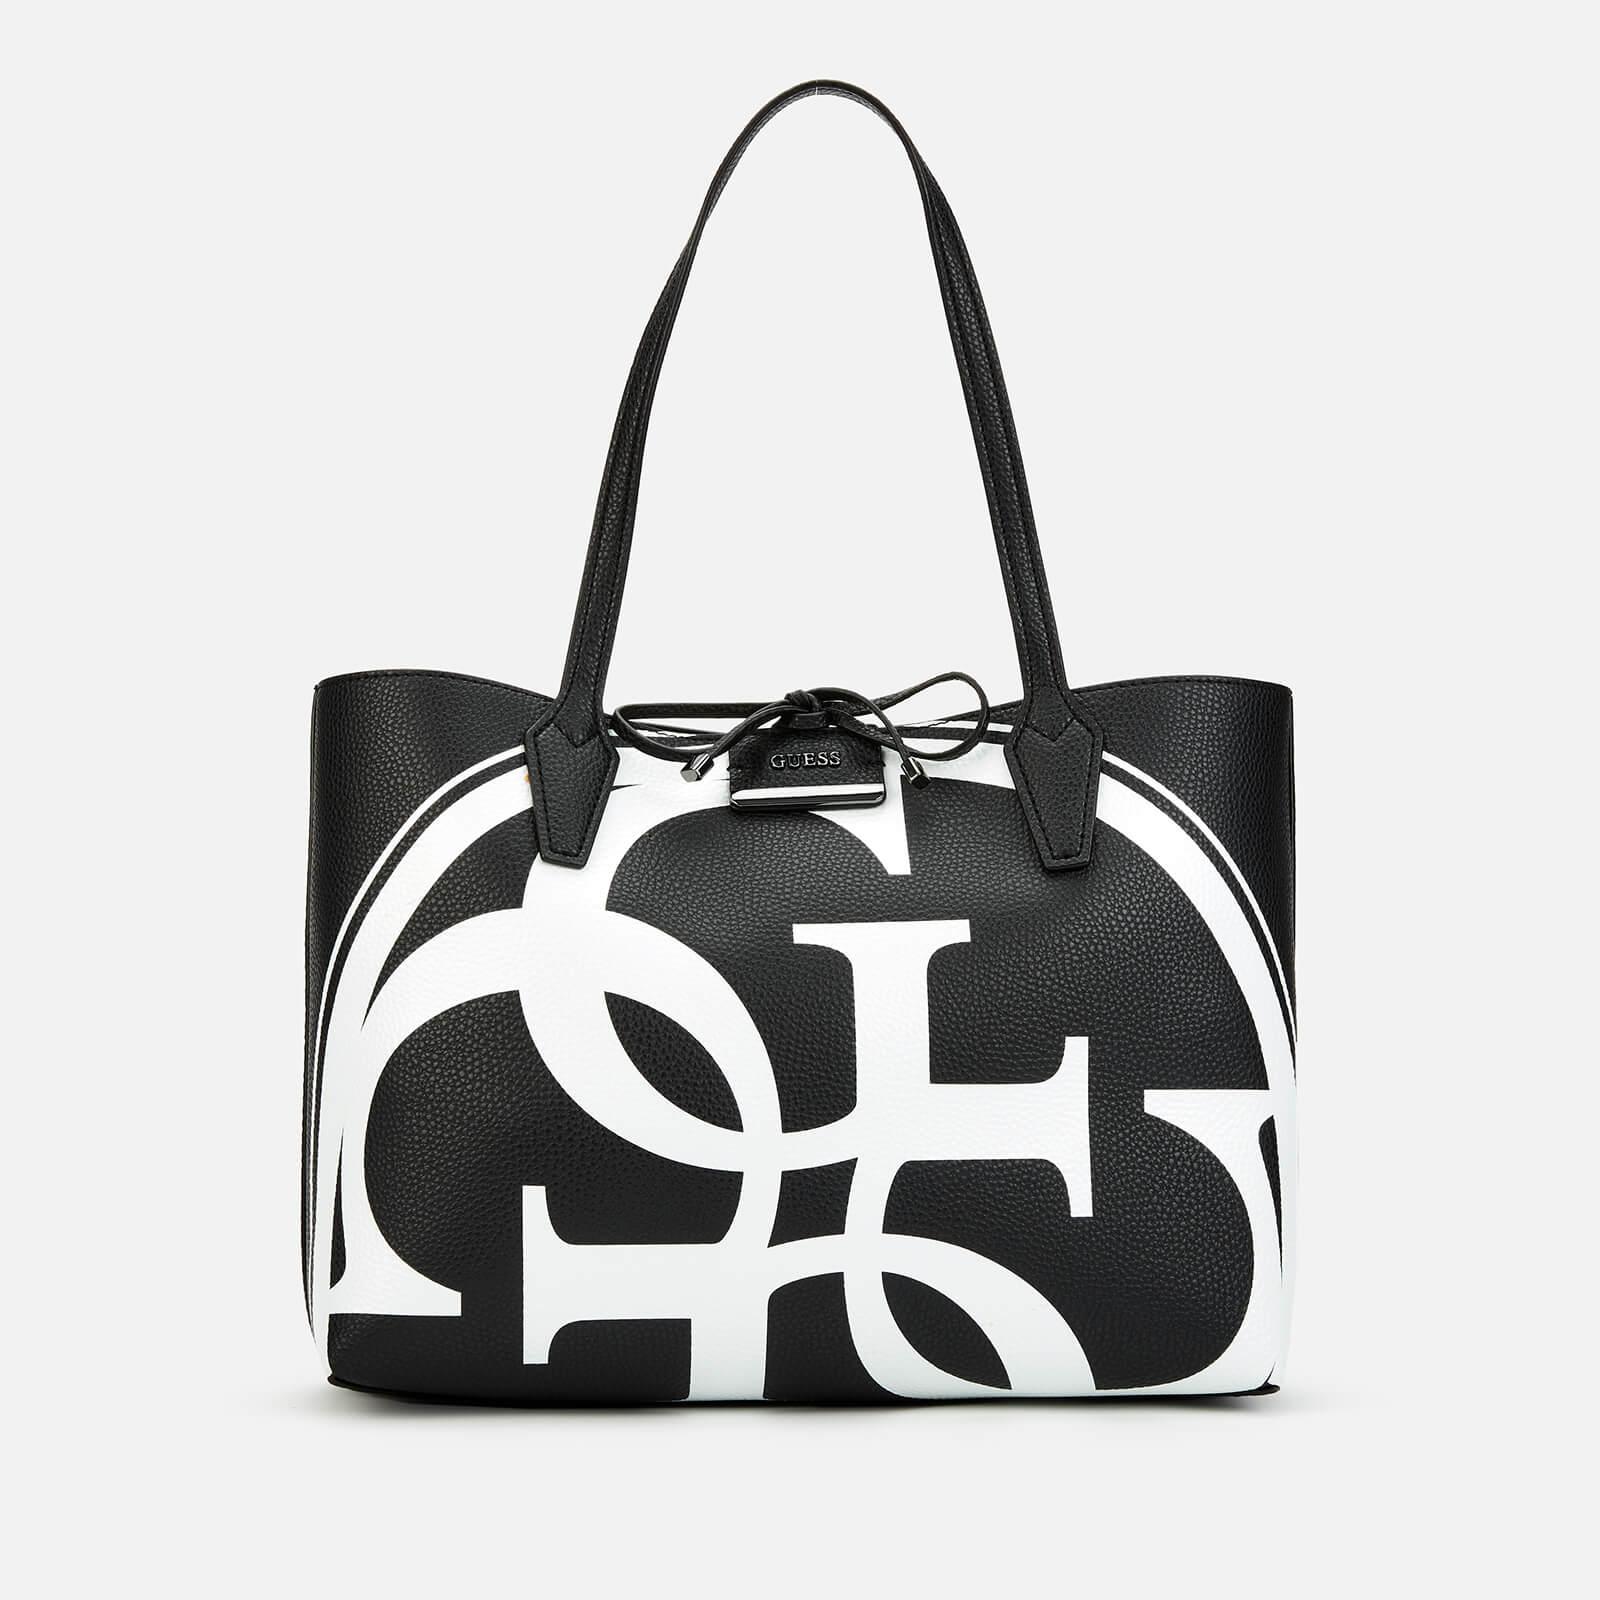 Guess Black And White Handbag Spain, SAVE 46% - online-pmo.com